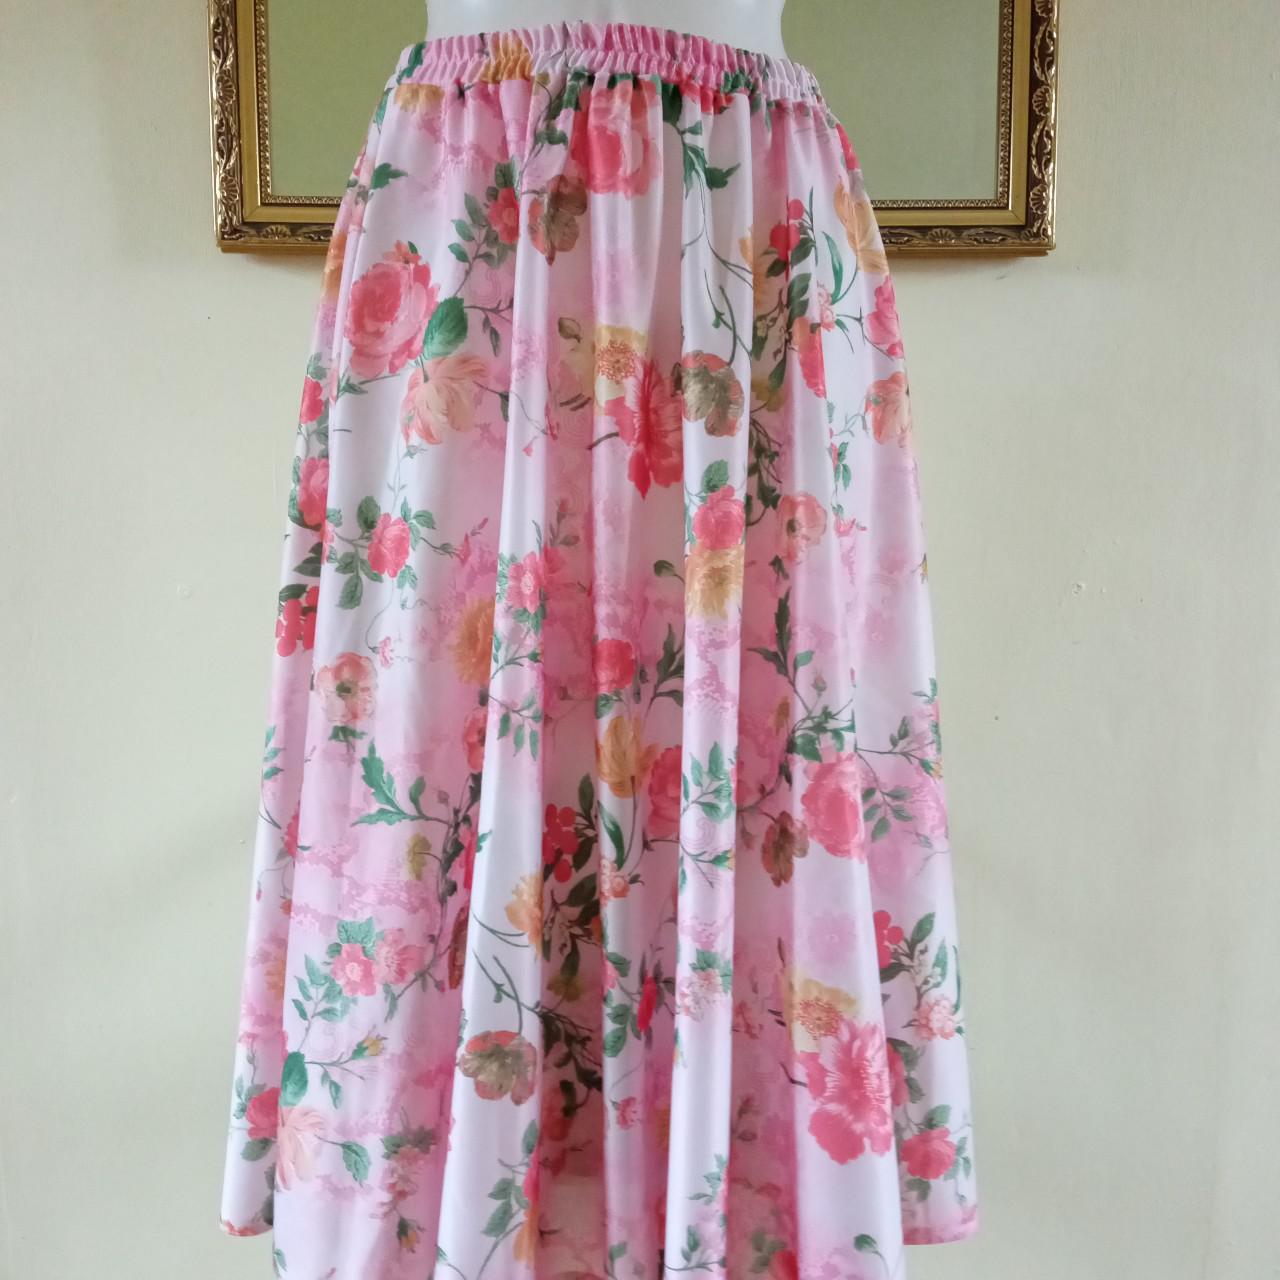 Product Image 4 - Vintage Pink Floral pattern Skirt.
Multicoloured